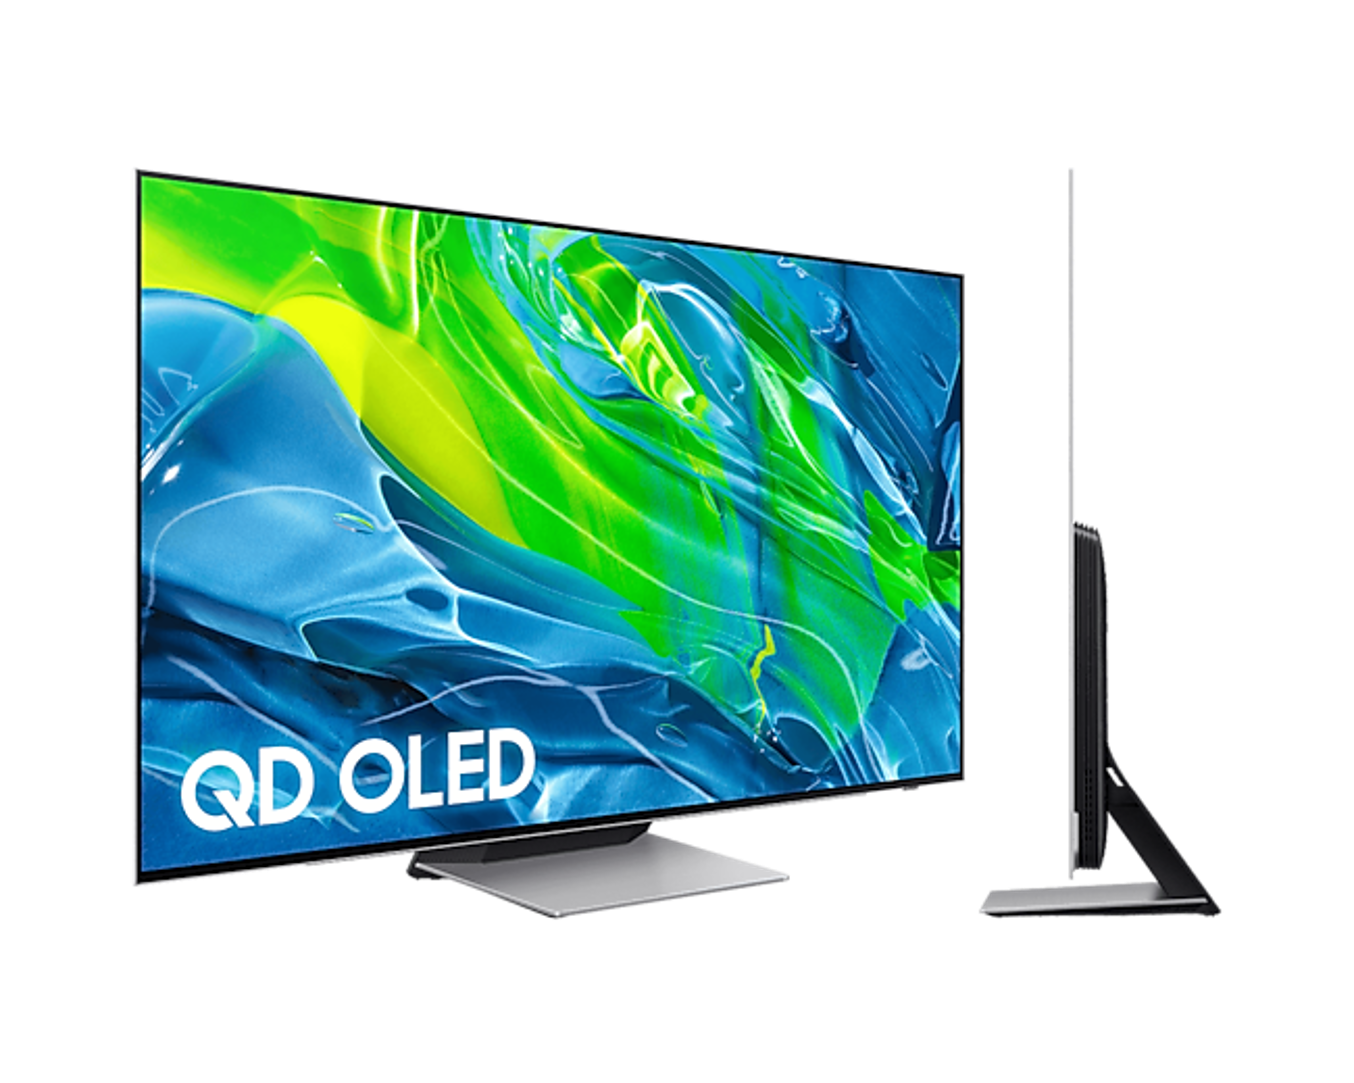  TV OLED: Electrónica